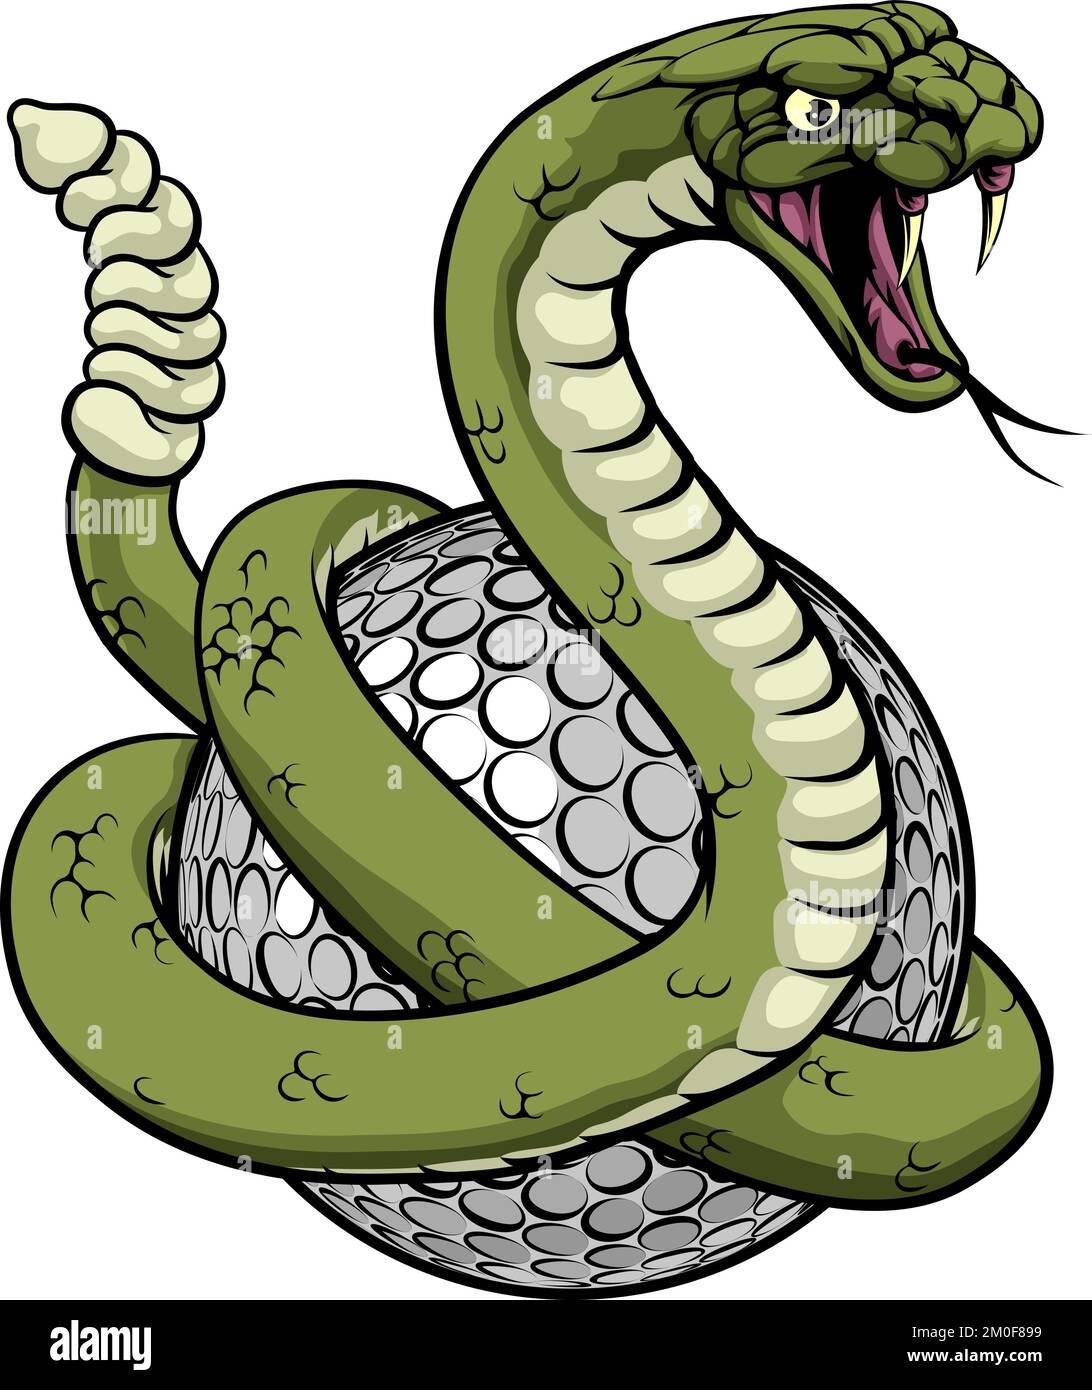 Rattlesnake Golf Ball Sports Team Cartoon Mascot Illustrazione Vettoriale